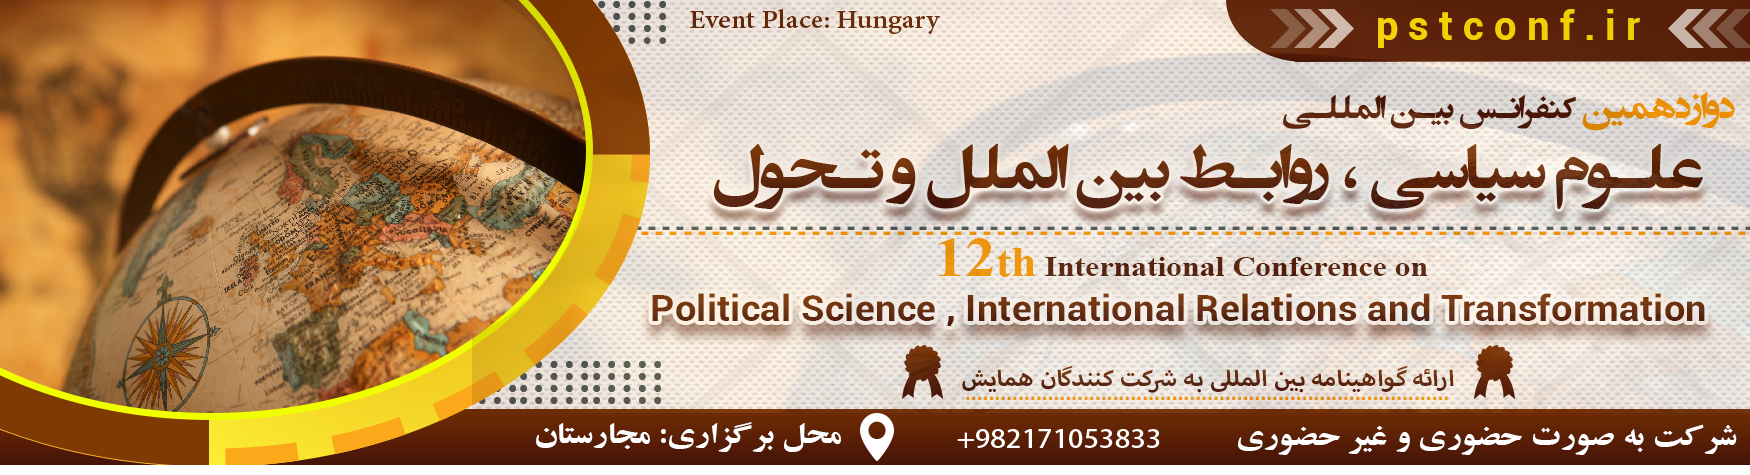 کنفرانس بین المللی علوم سیاسی،روابط بین الملل و تحول	